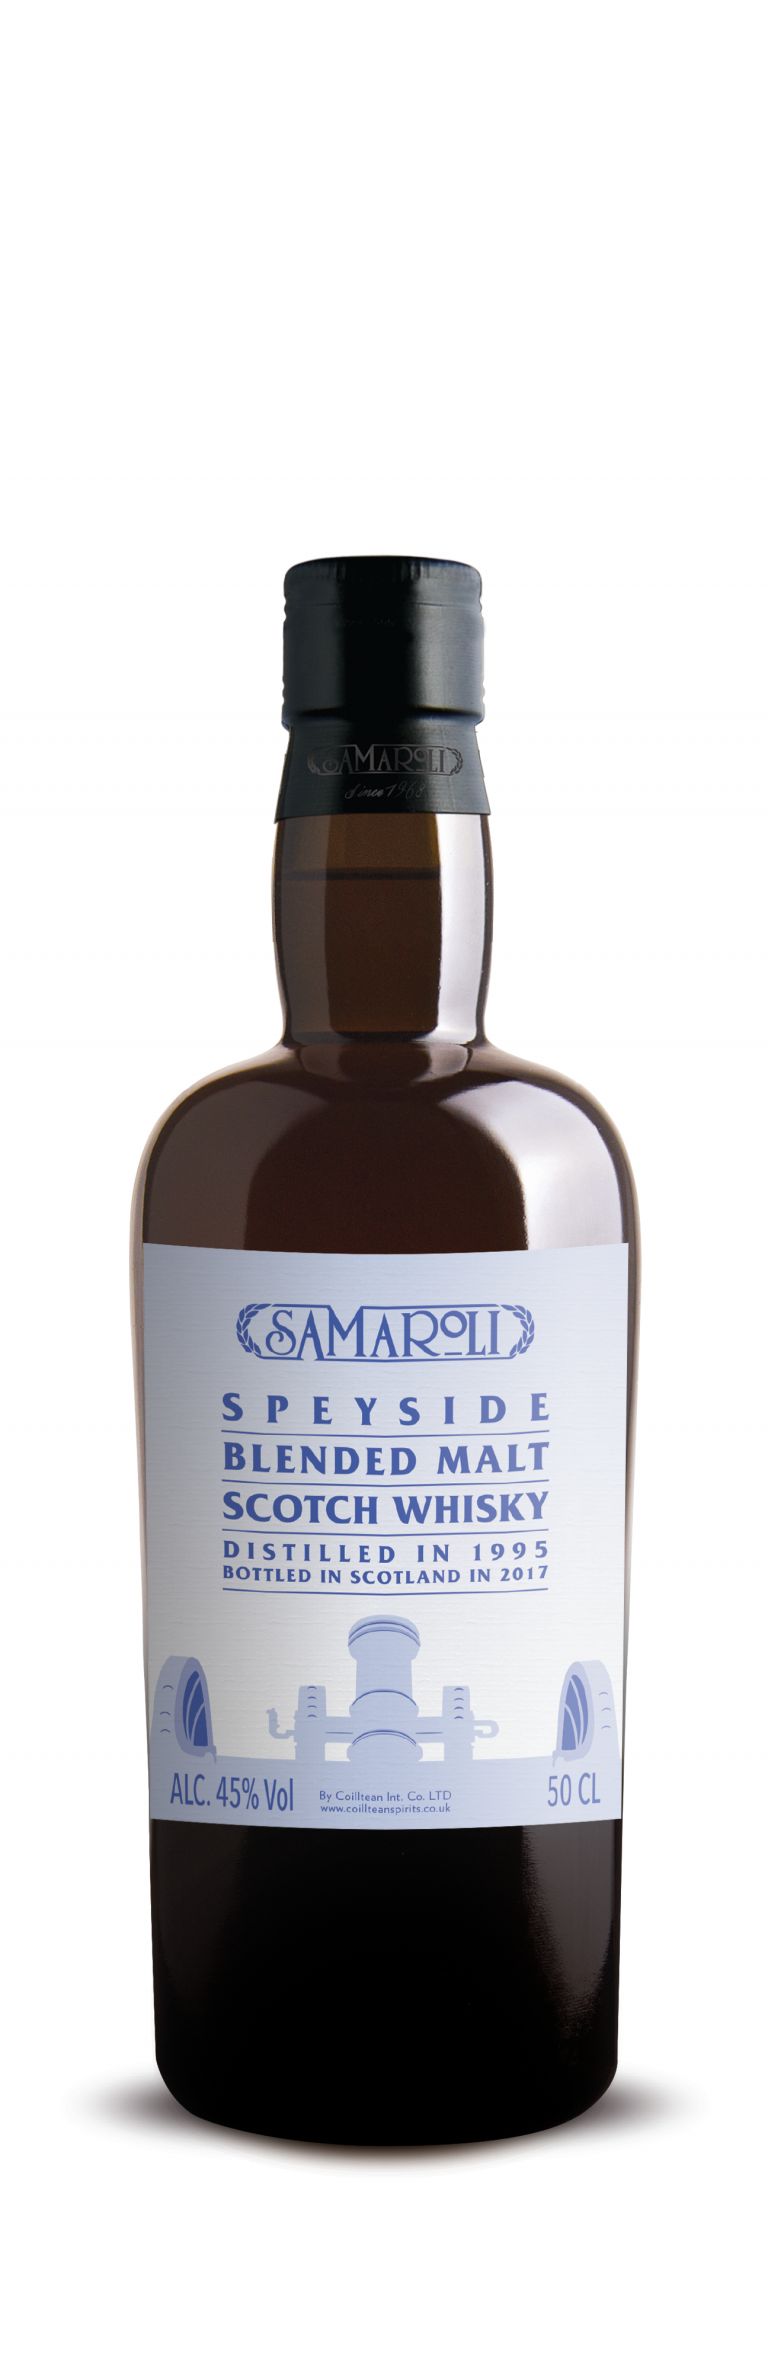 1995 Speyside - Blended Malt Scotch Whisky - ed. 2017 - 50 cl